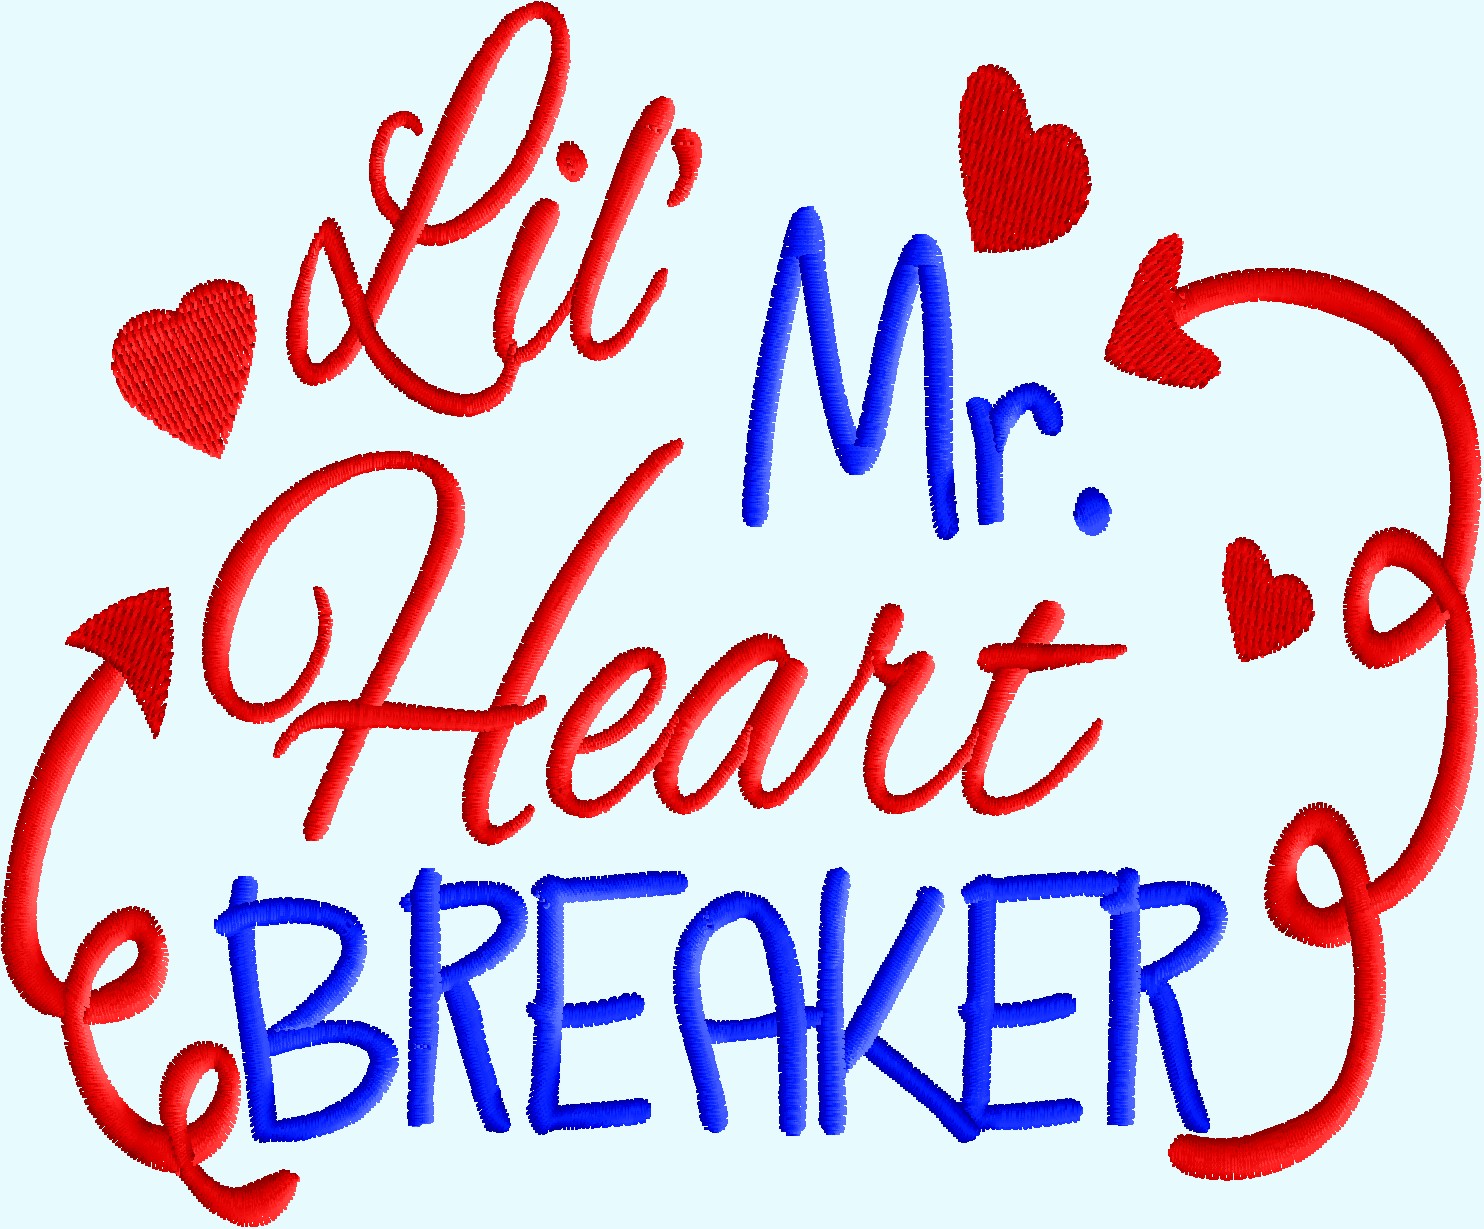 Little Mr. Heart Breaker design, 2 sizes, machine embroidery design